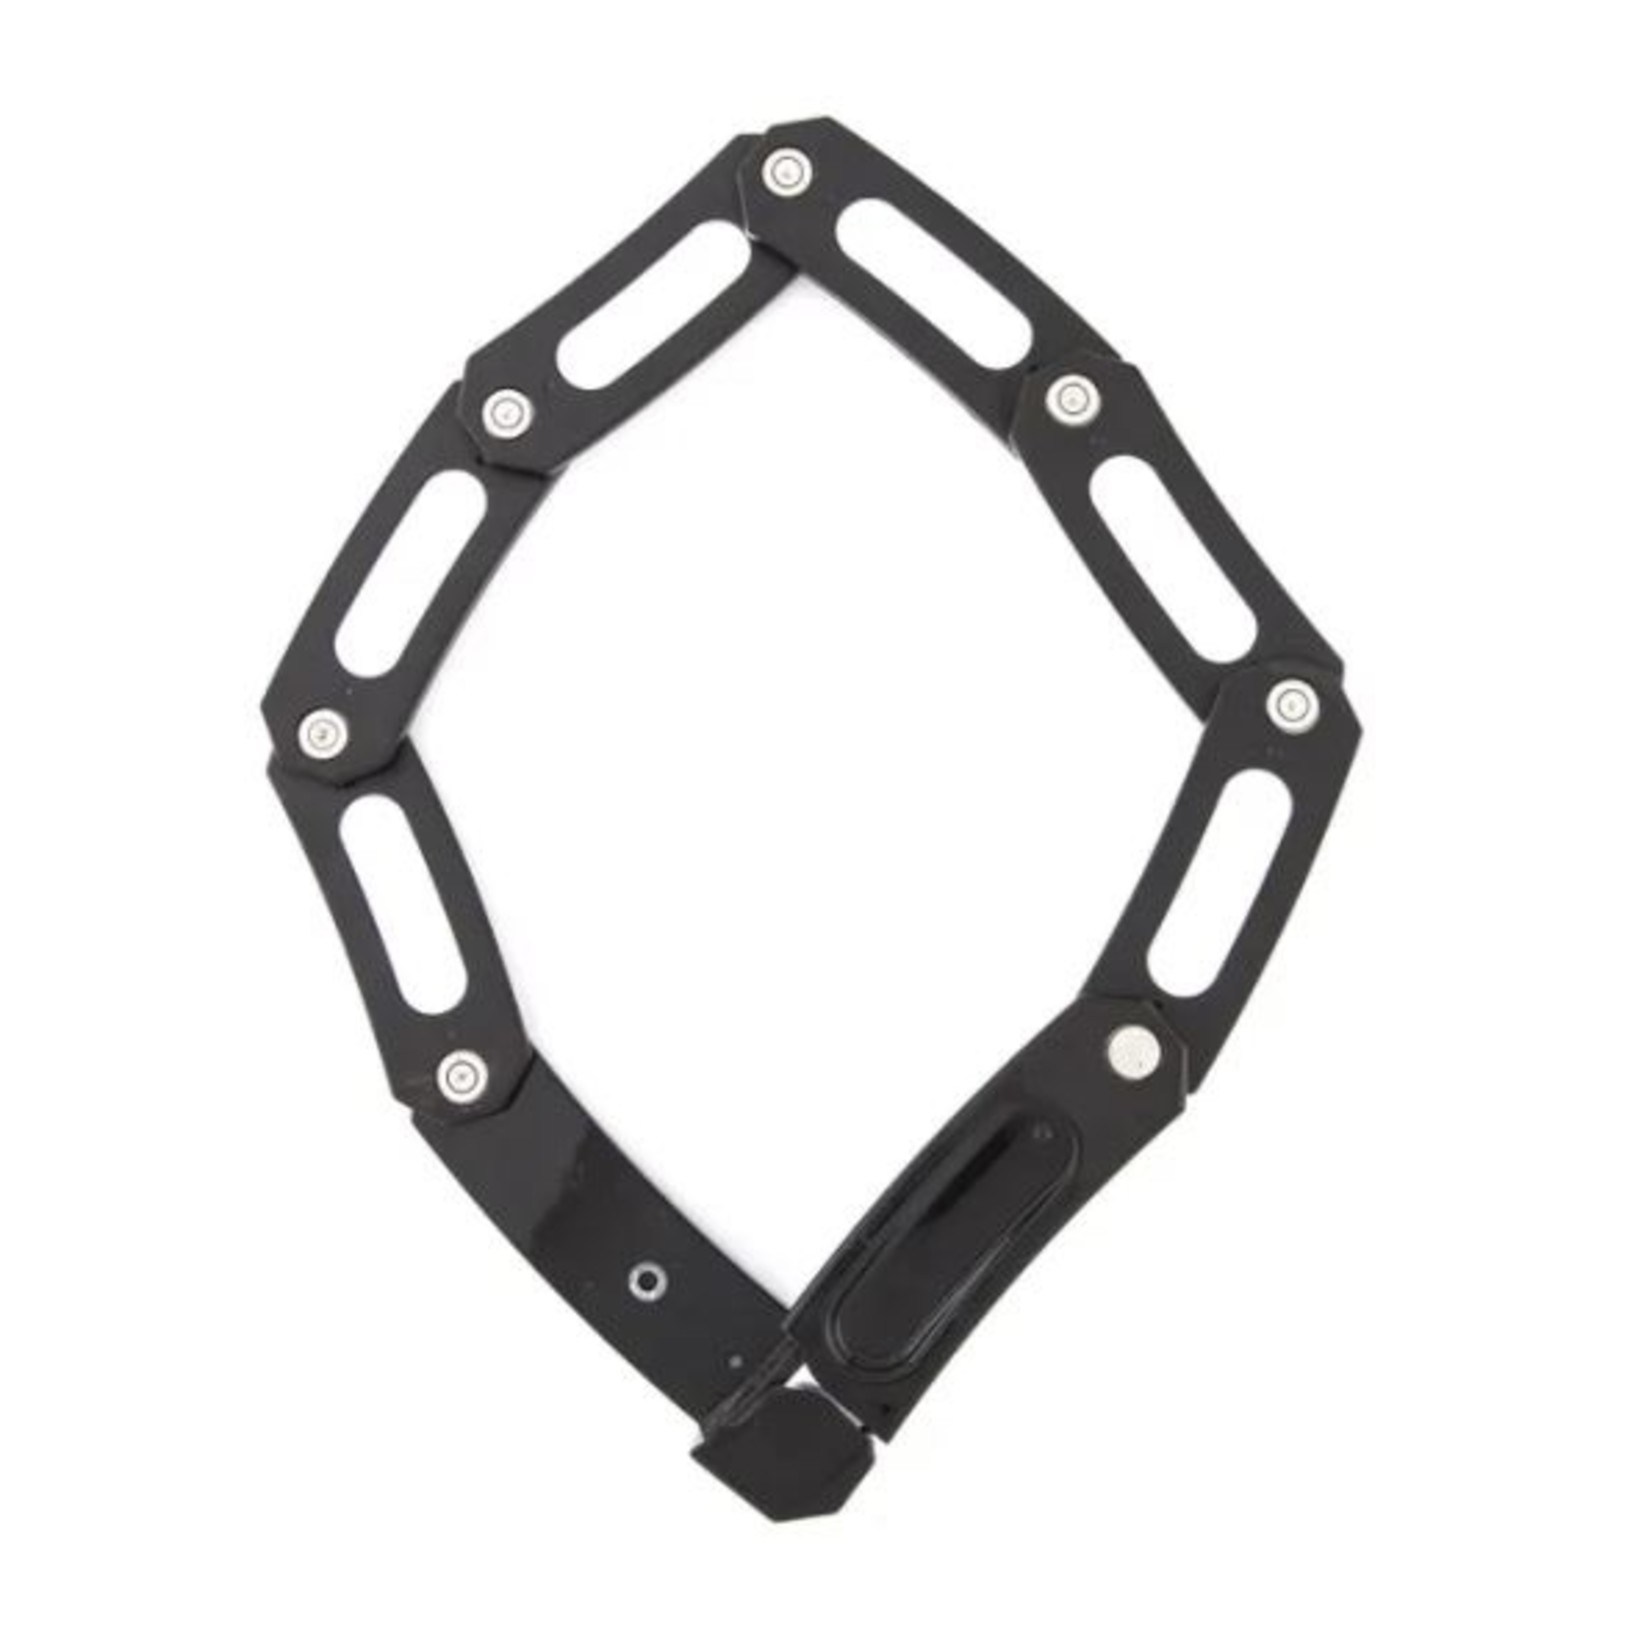 ULAC ULAC Type-Ax Alu Blade Folding Bike Lock 70cm - Bracket- Dimple Key Black